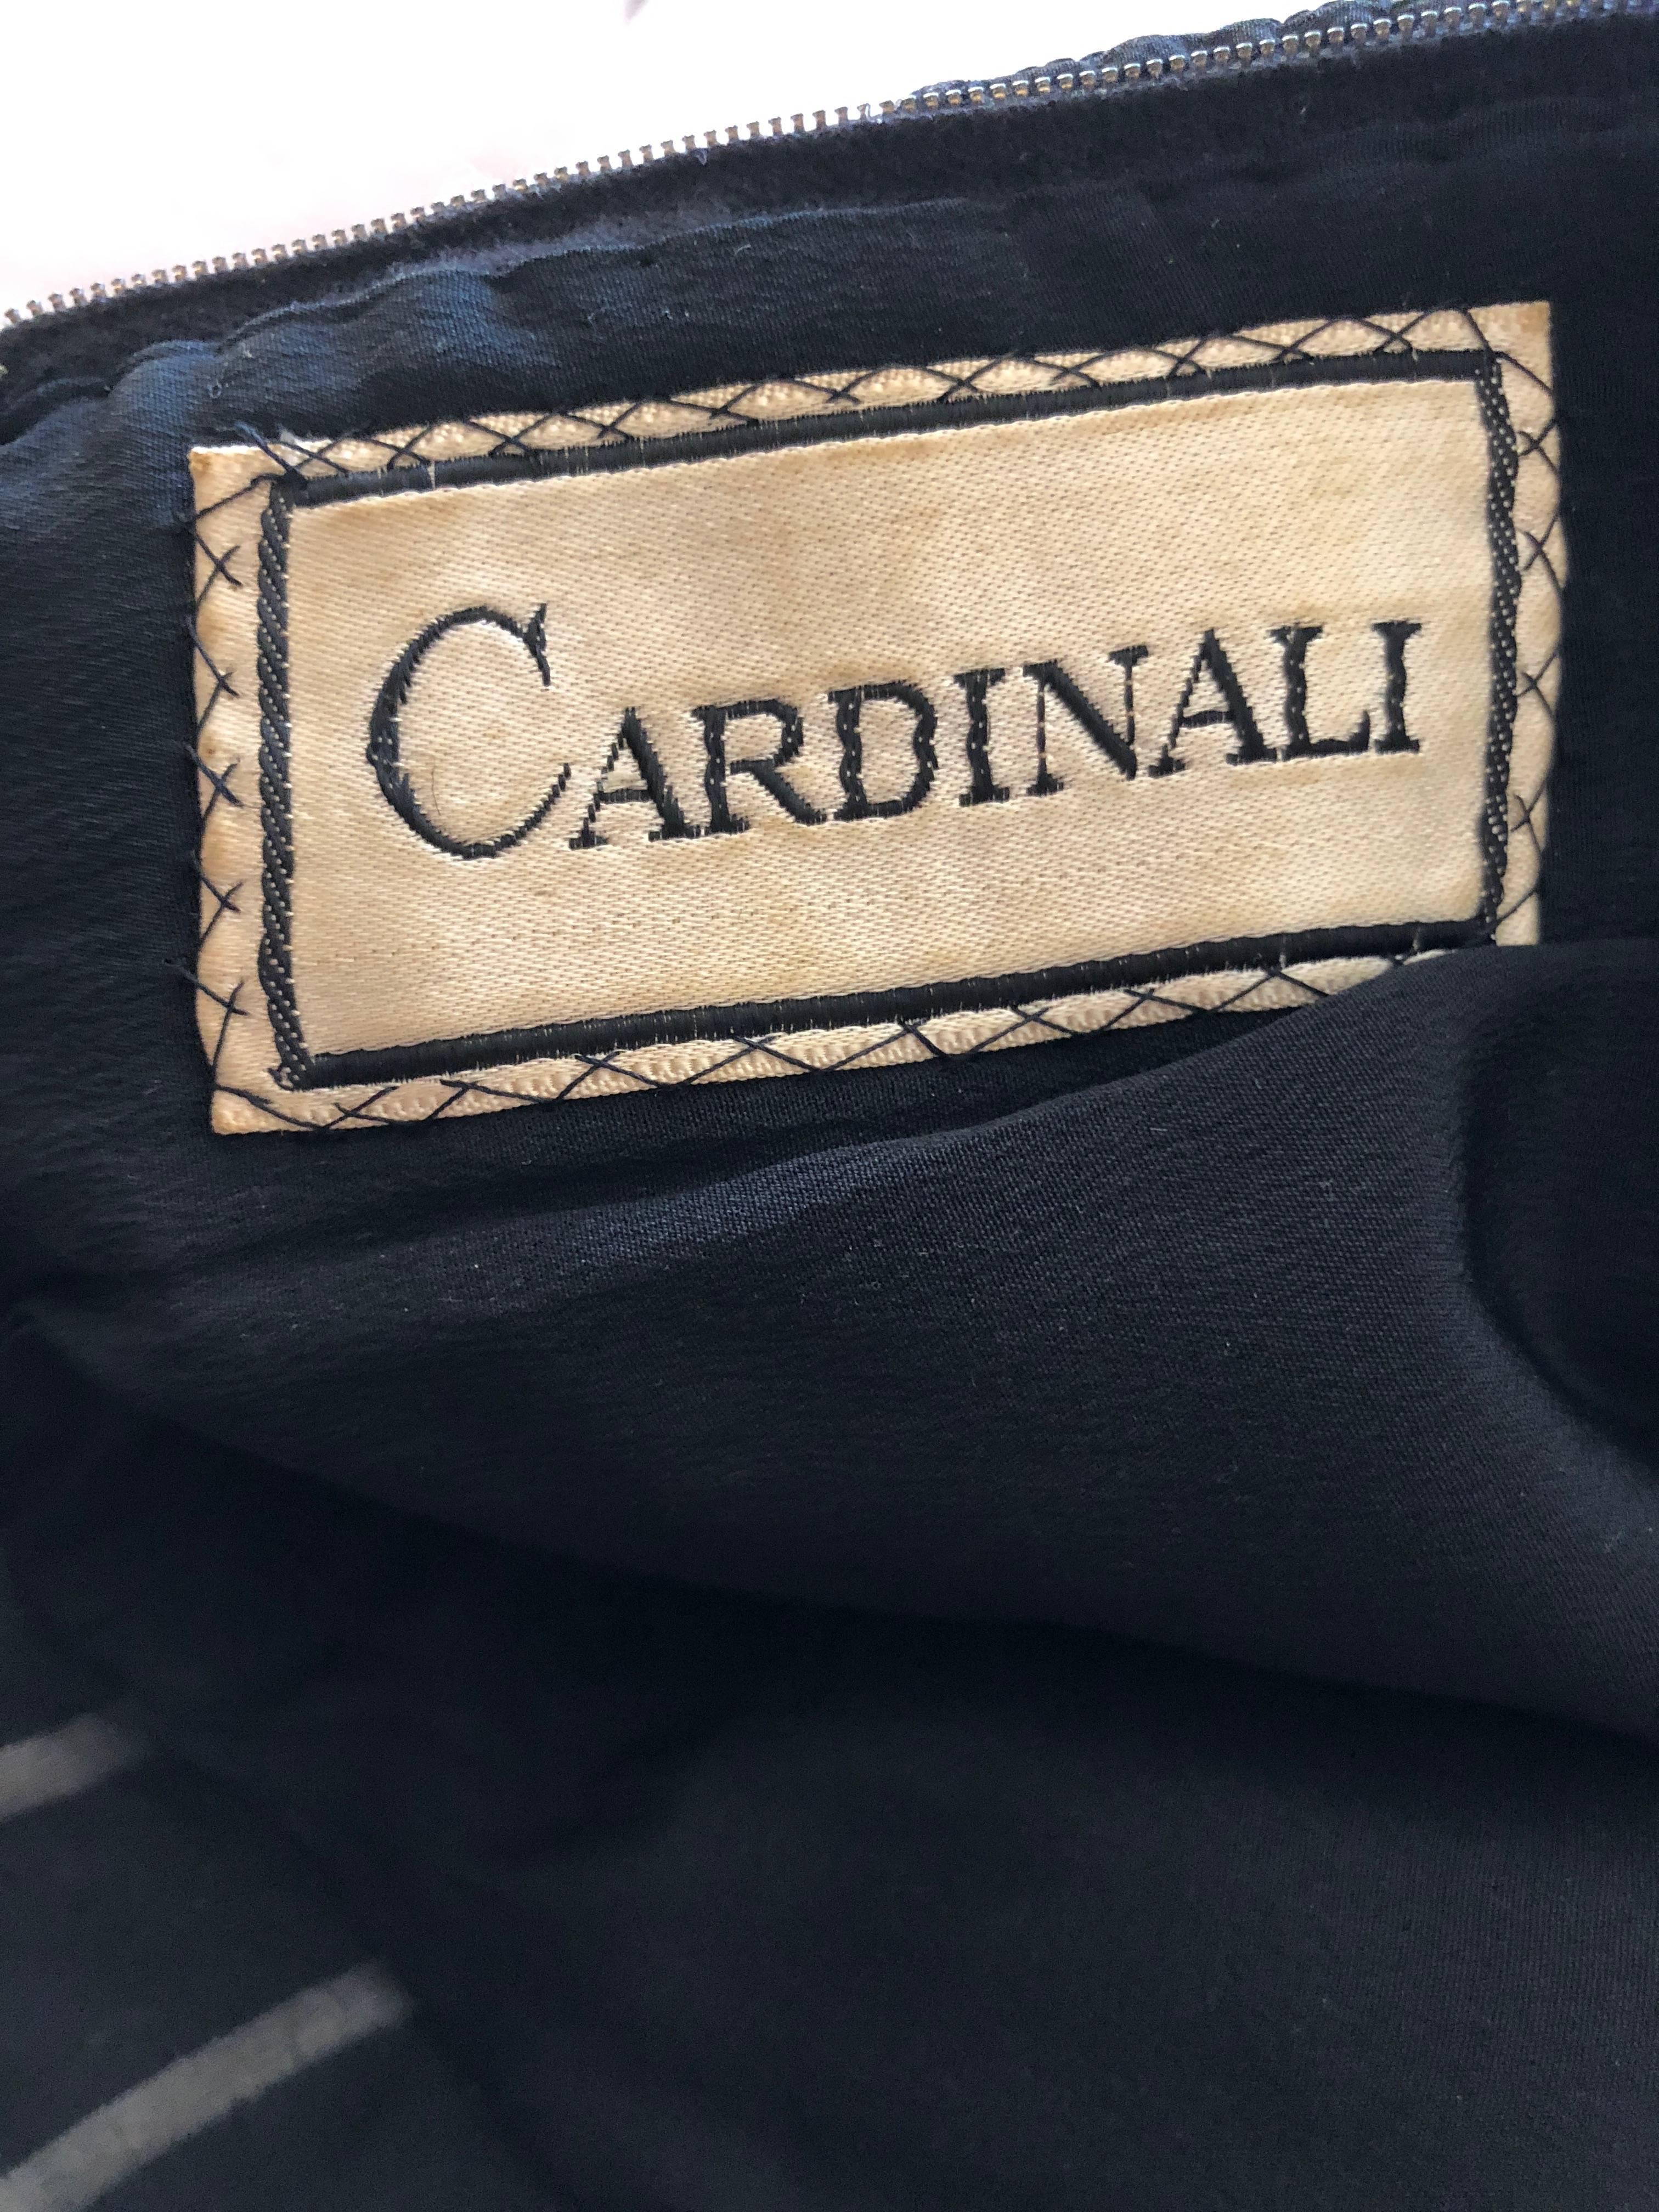 Cardinali Back Poet Sleeve Evening Dress with Sheer Birdcage Motif For Sale 8